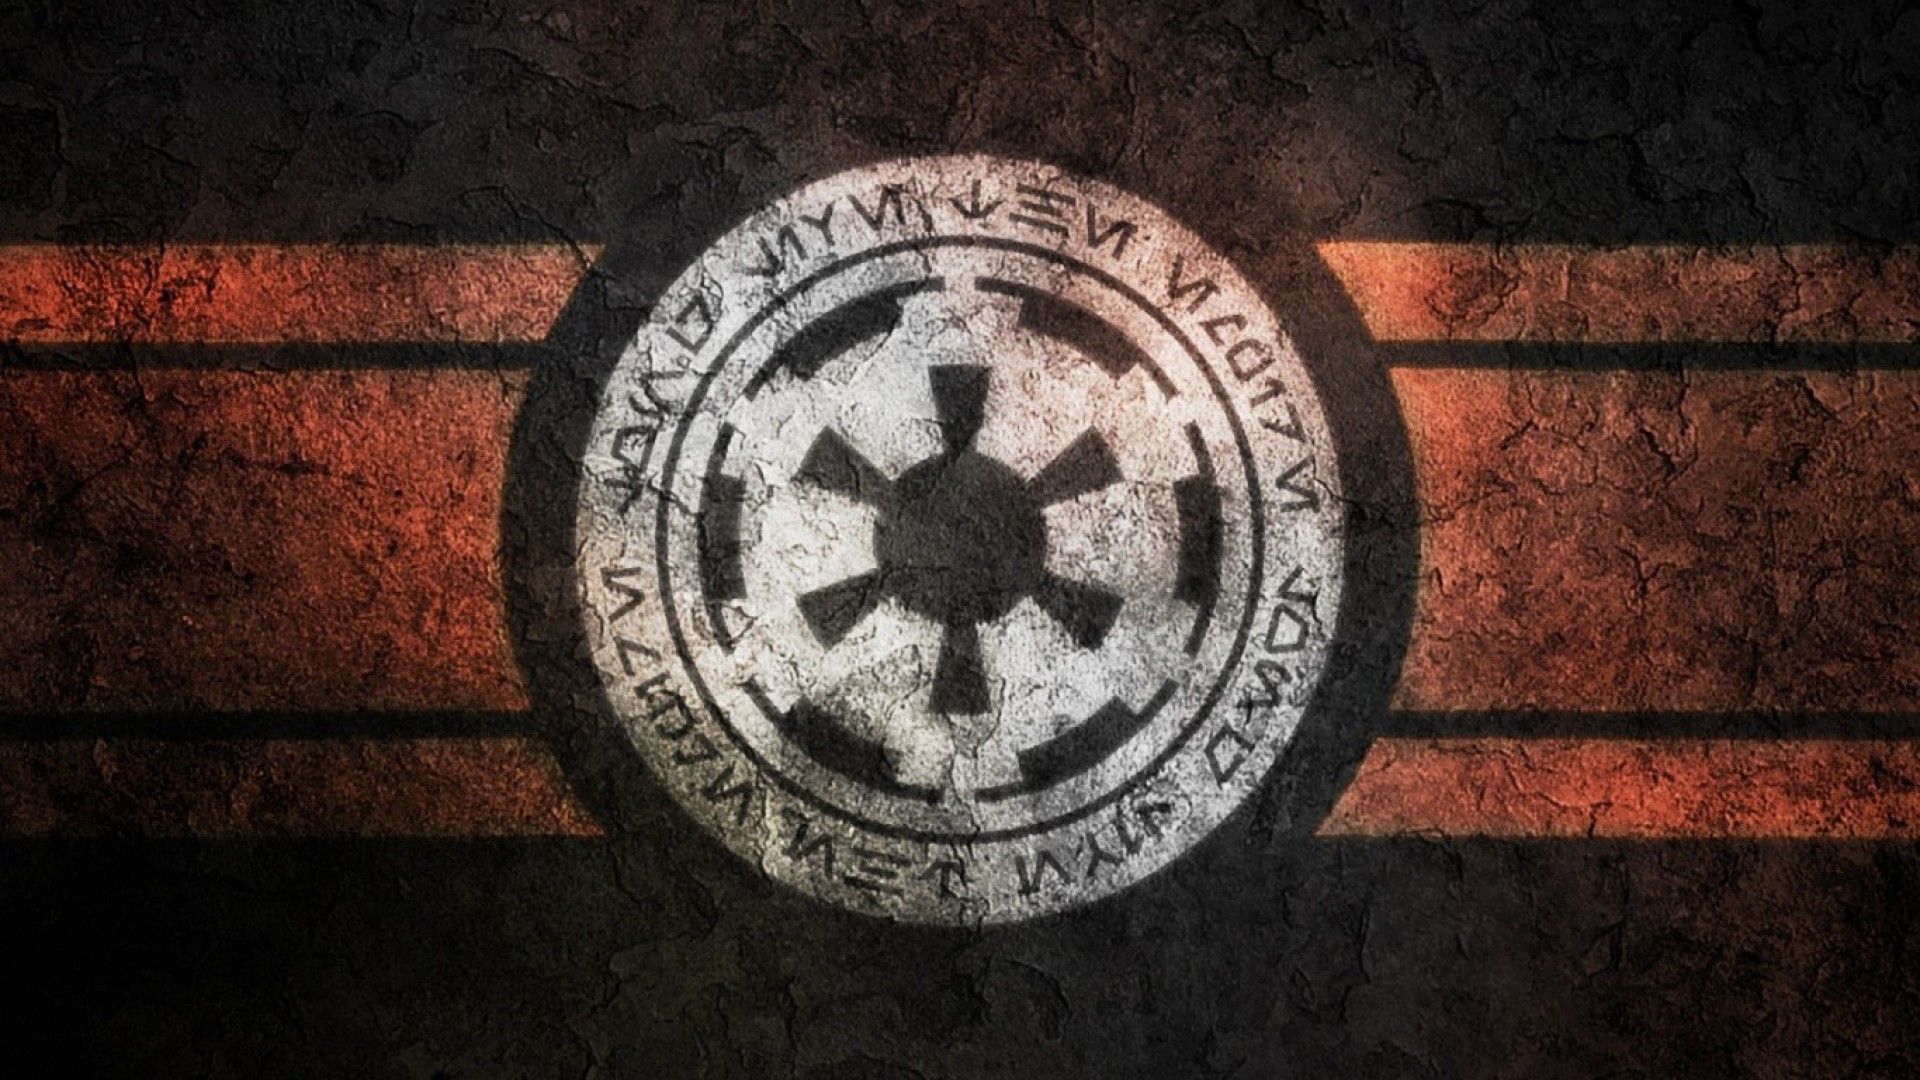 Galactic Empire Imperial Star Wars Symbol Jpg